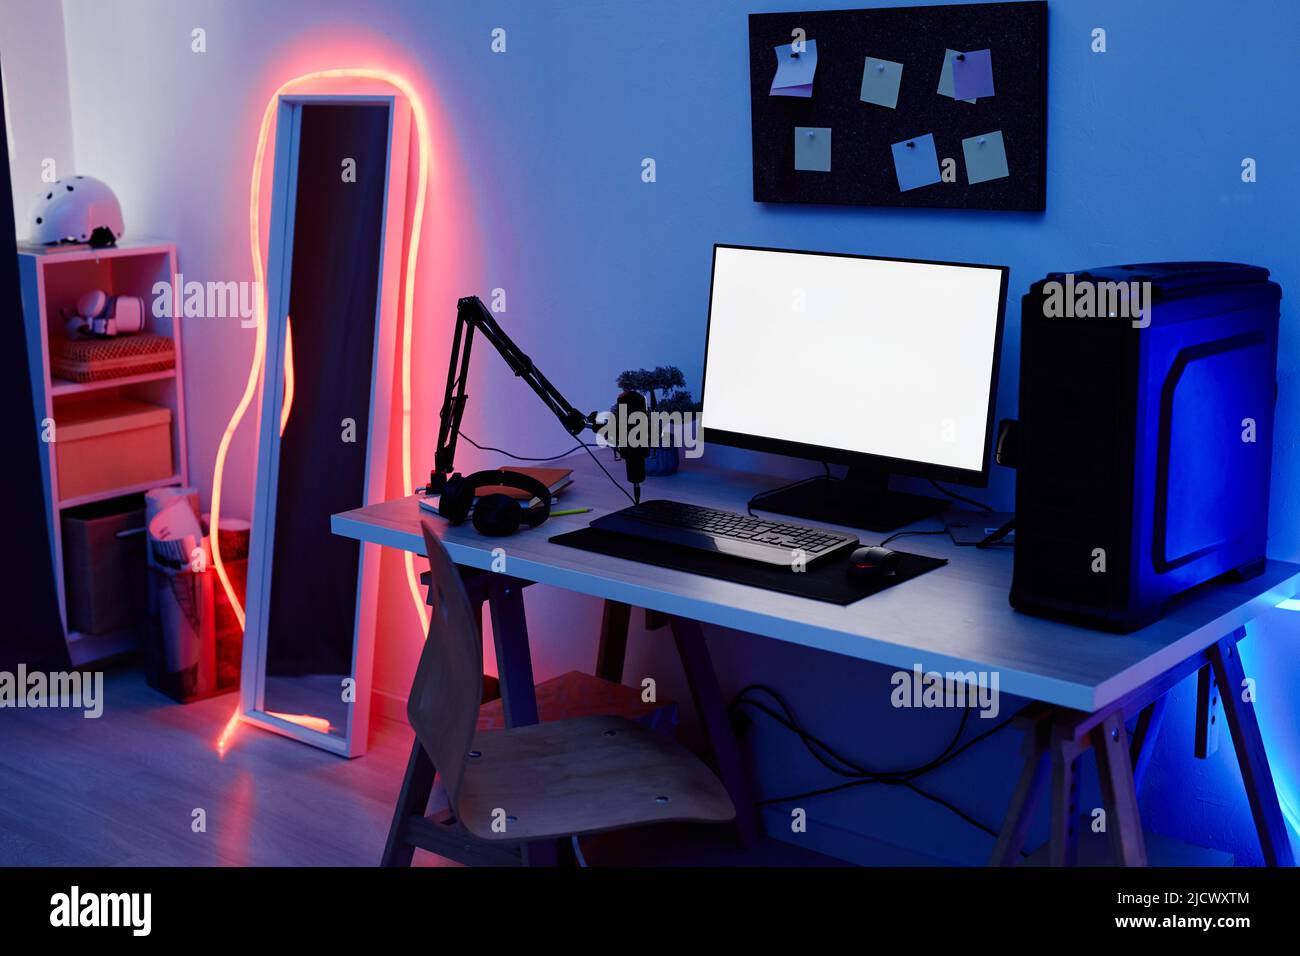 Gaming room -Fotos und -Bildmaterial in hoher Auflösung – Alamy